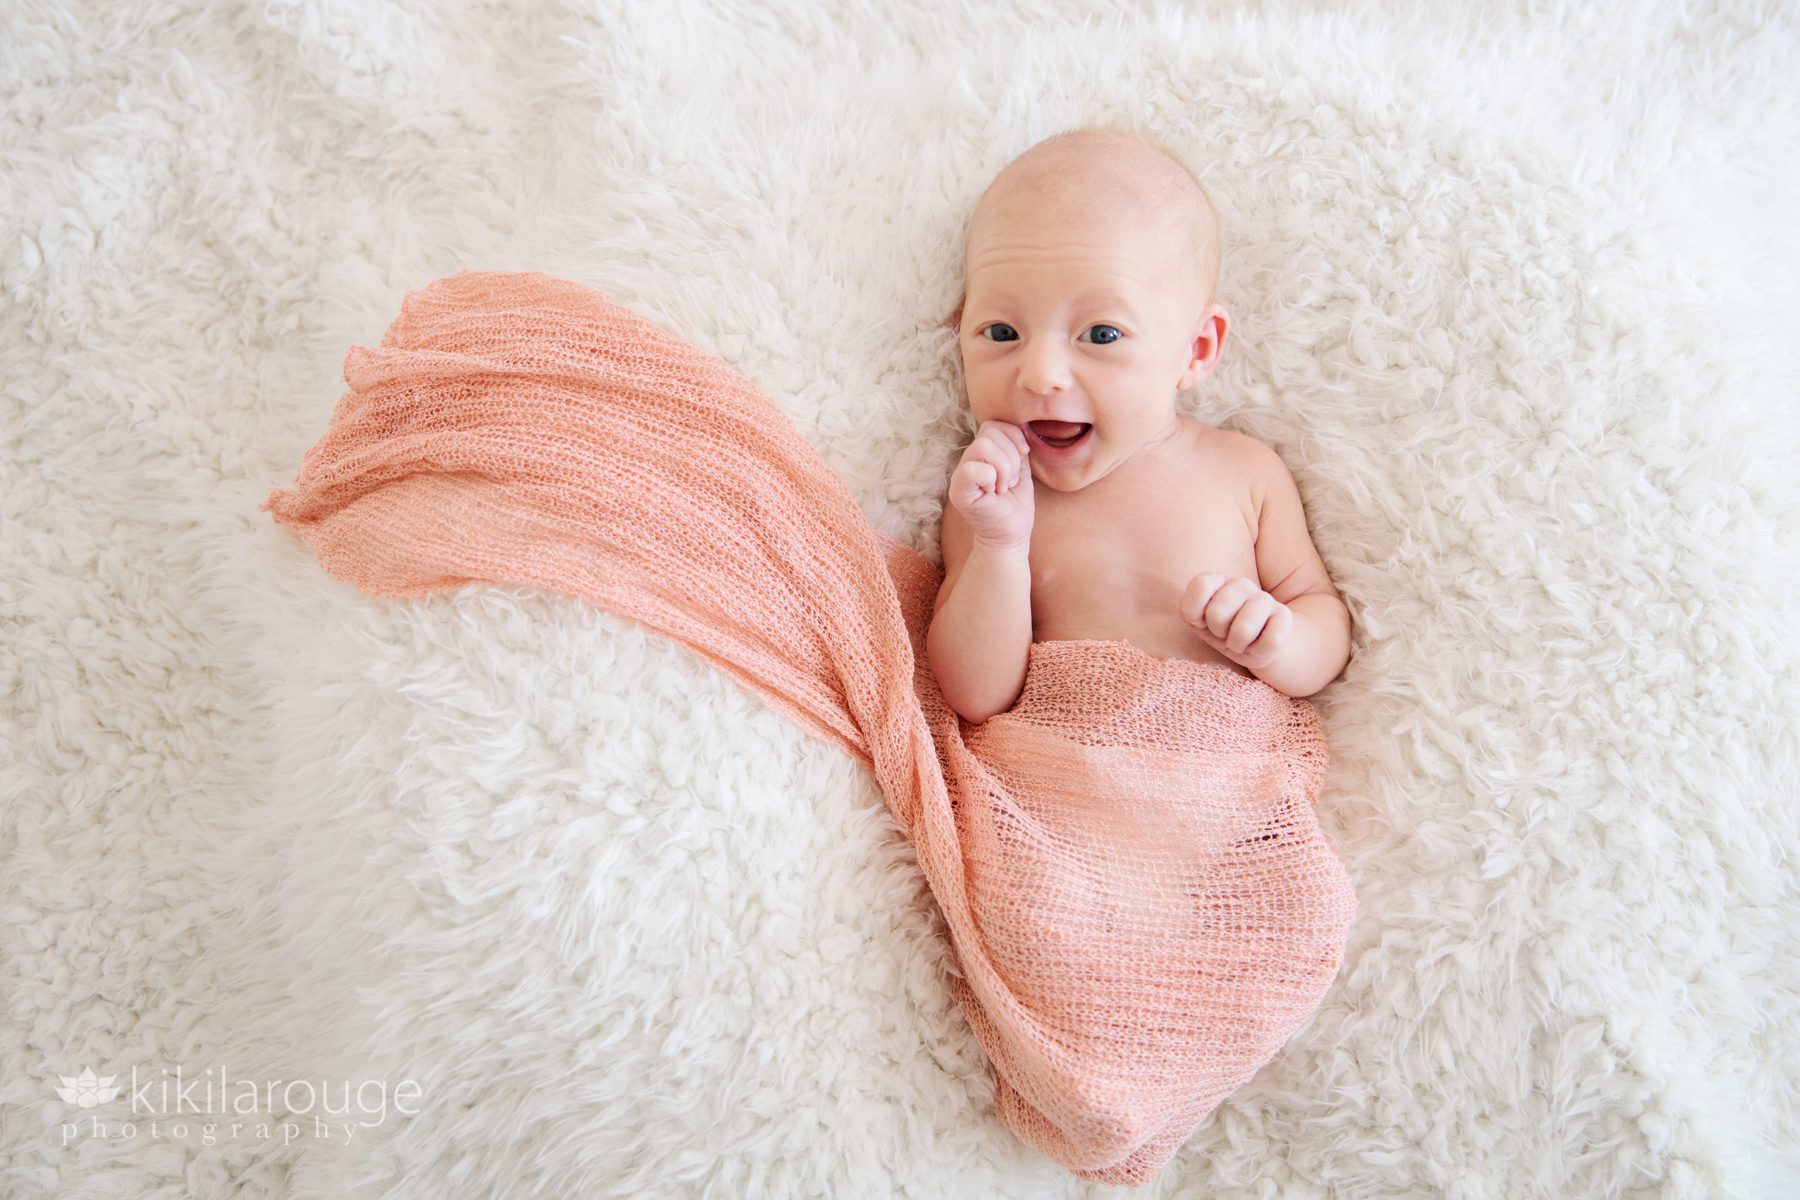 Smiling newborn baby girl in peach wrap on soft white blanket